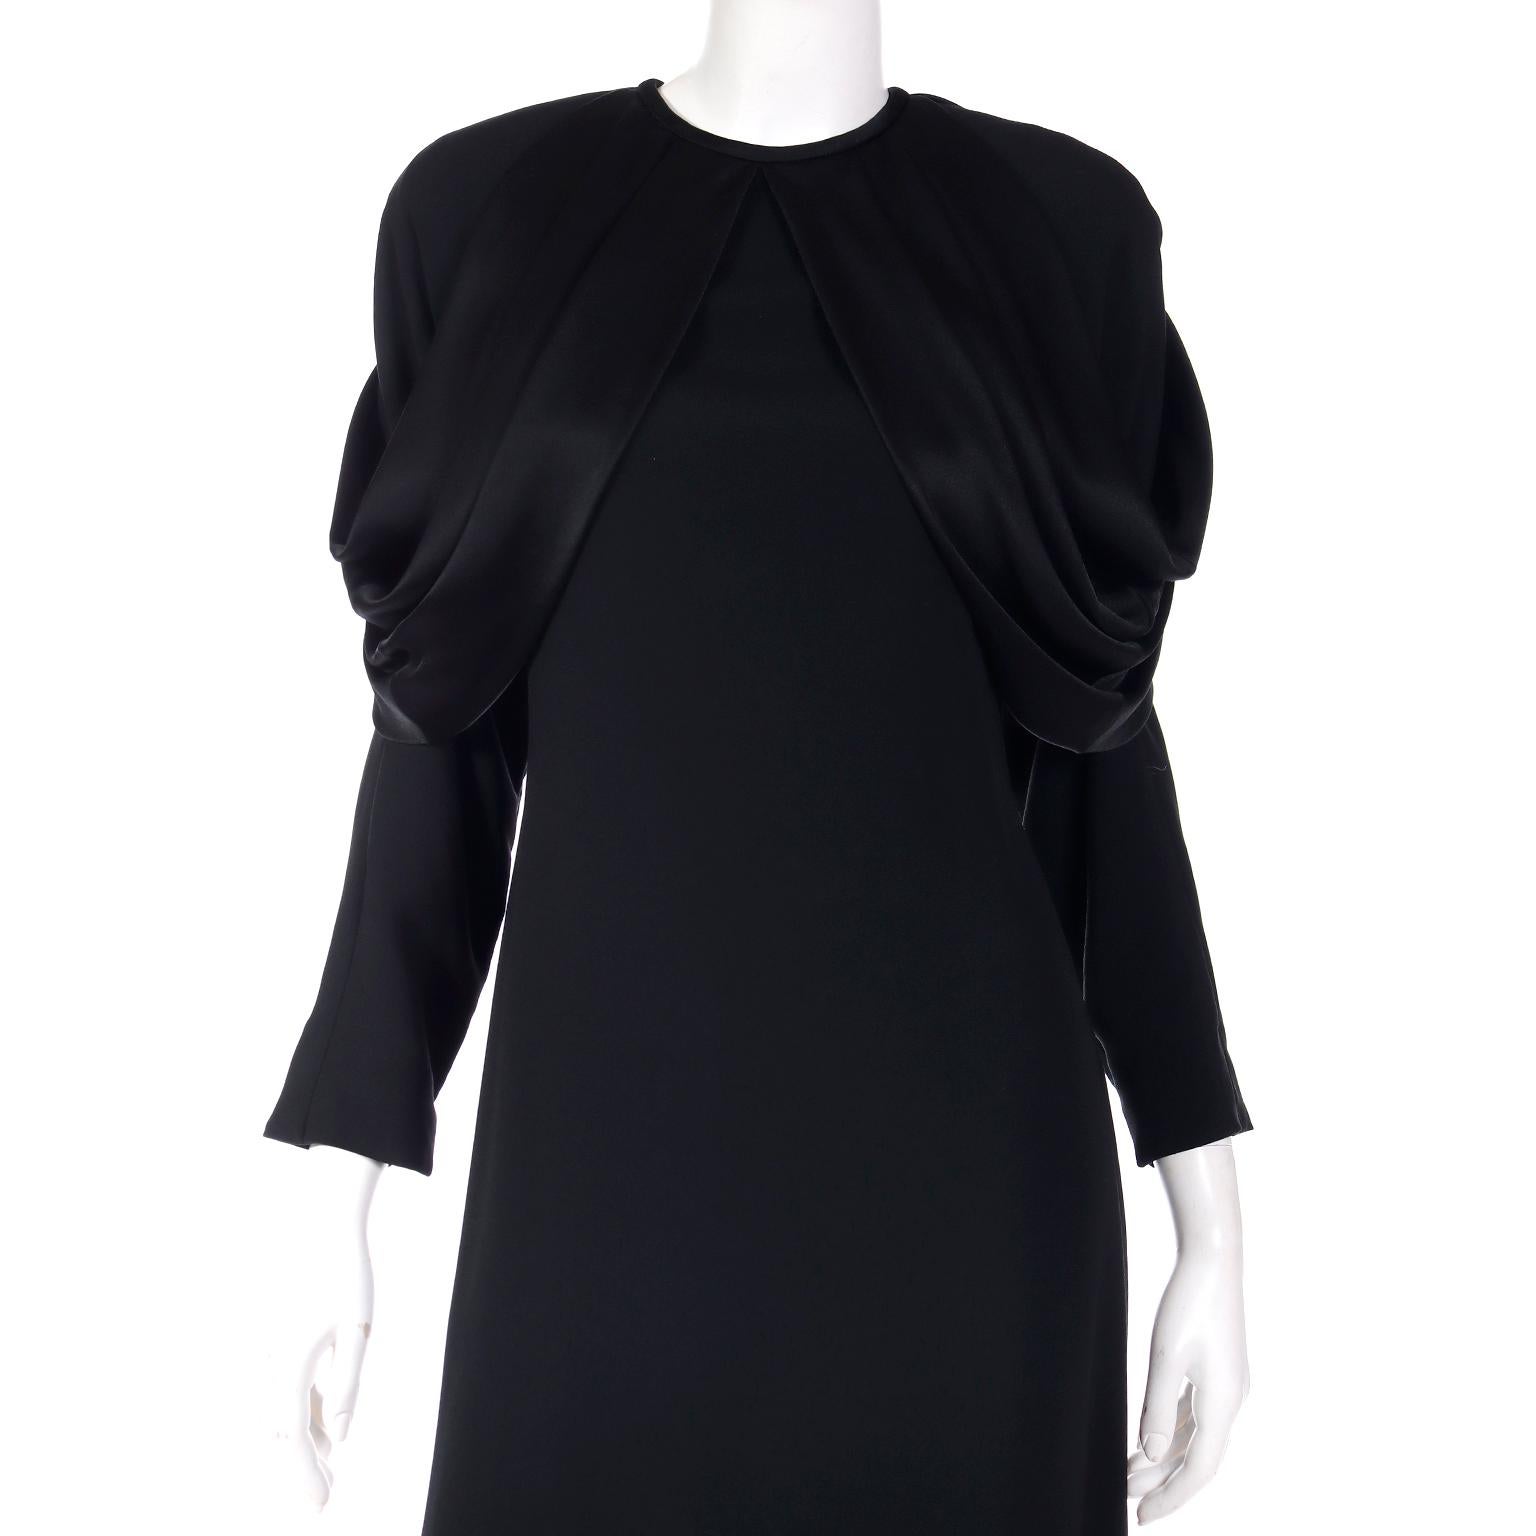 Adele Simpson Vintage Black Crepe Dress With Dramatic Satin Drape For Sale 2